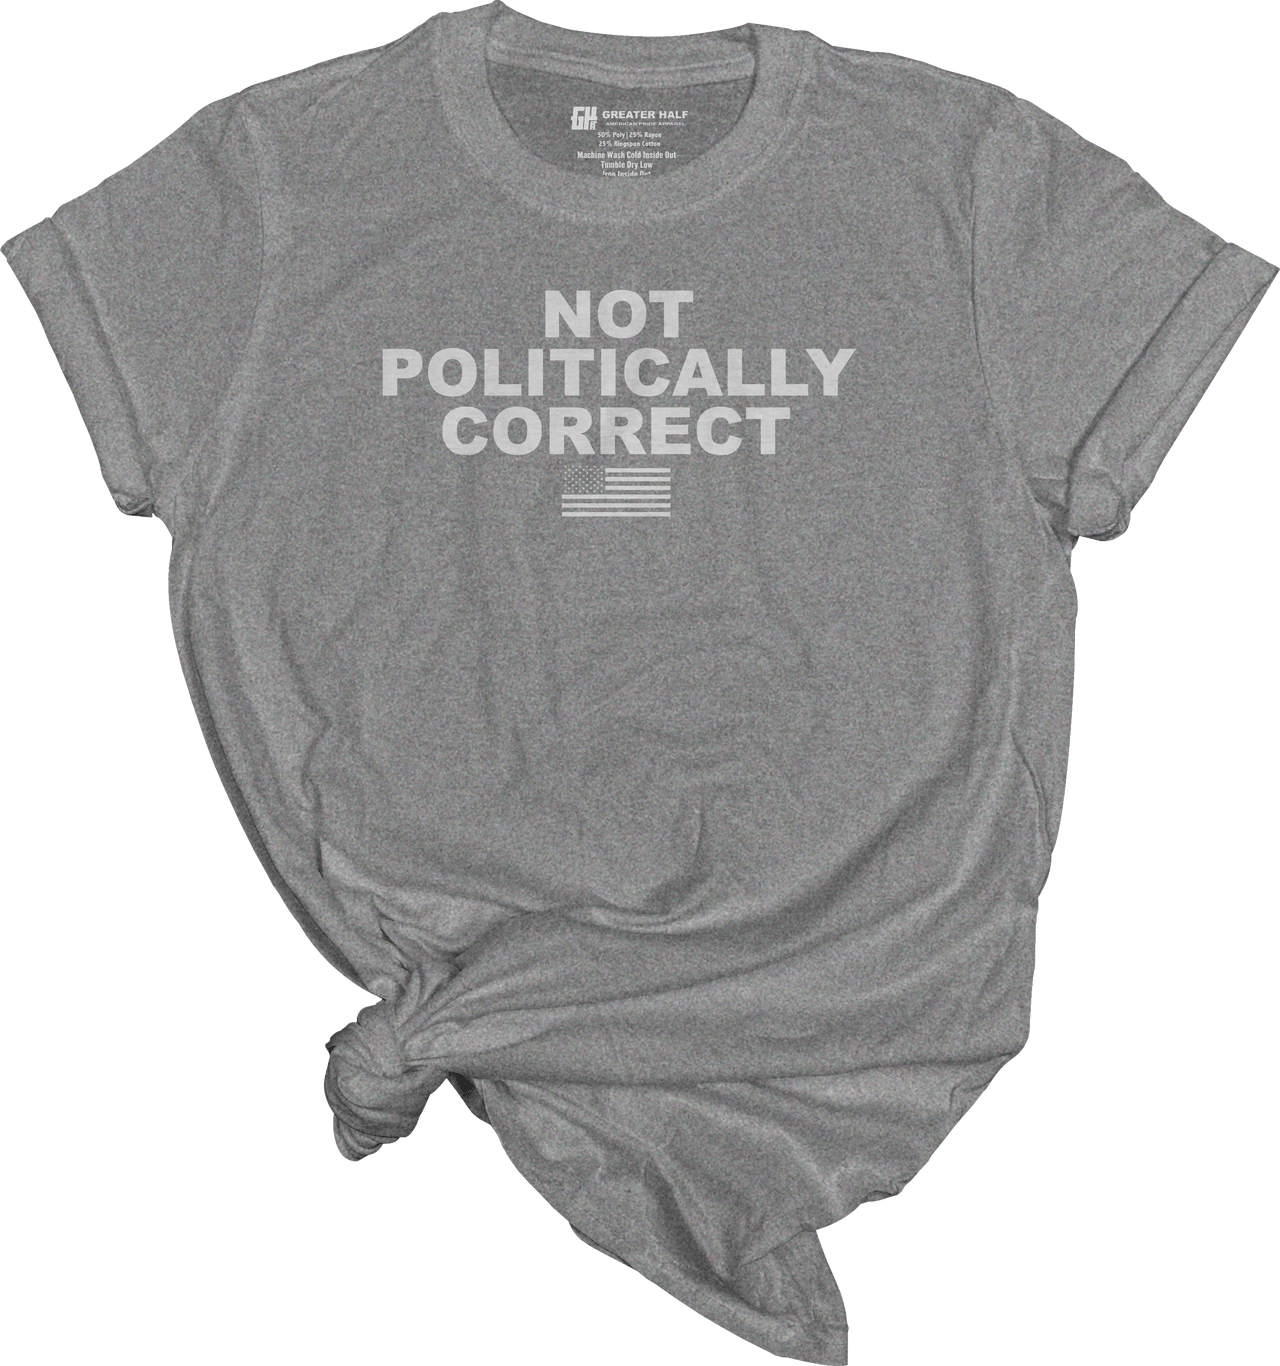 Not Politically Correct - Greater Half